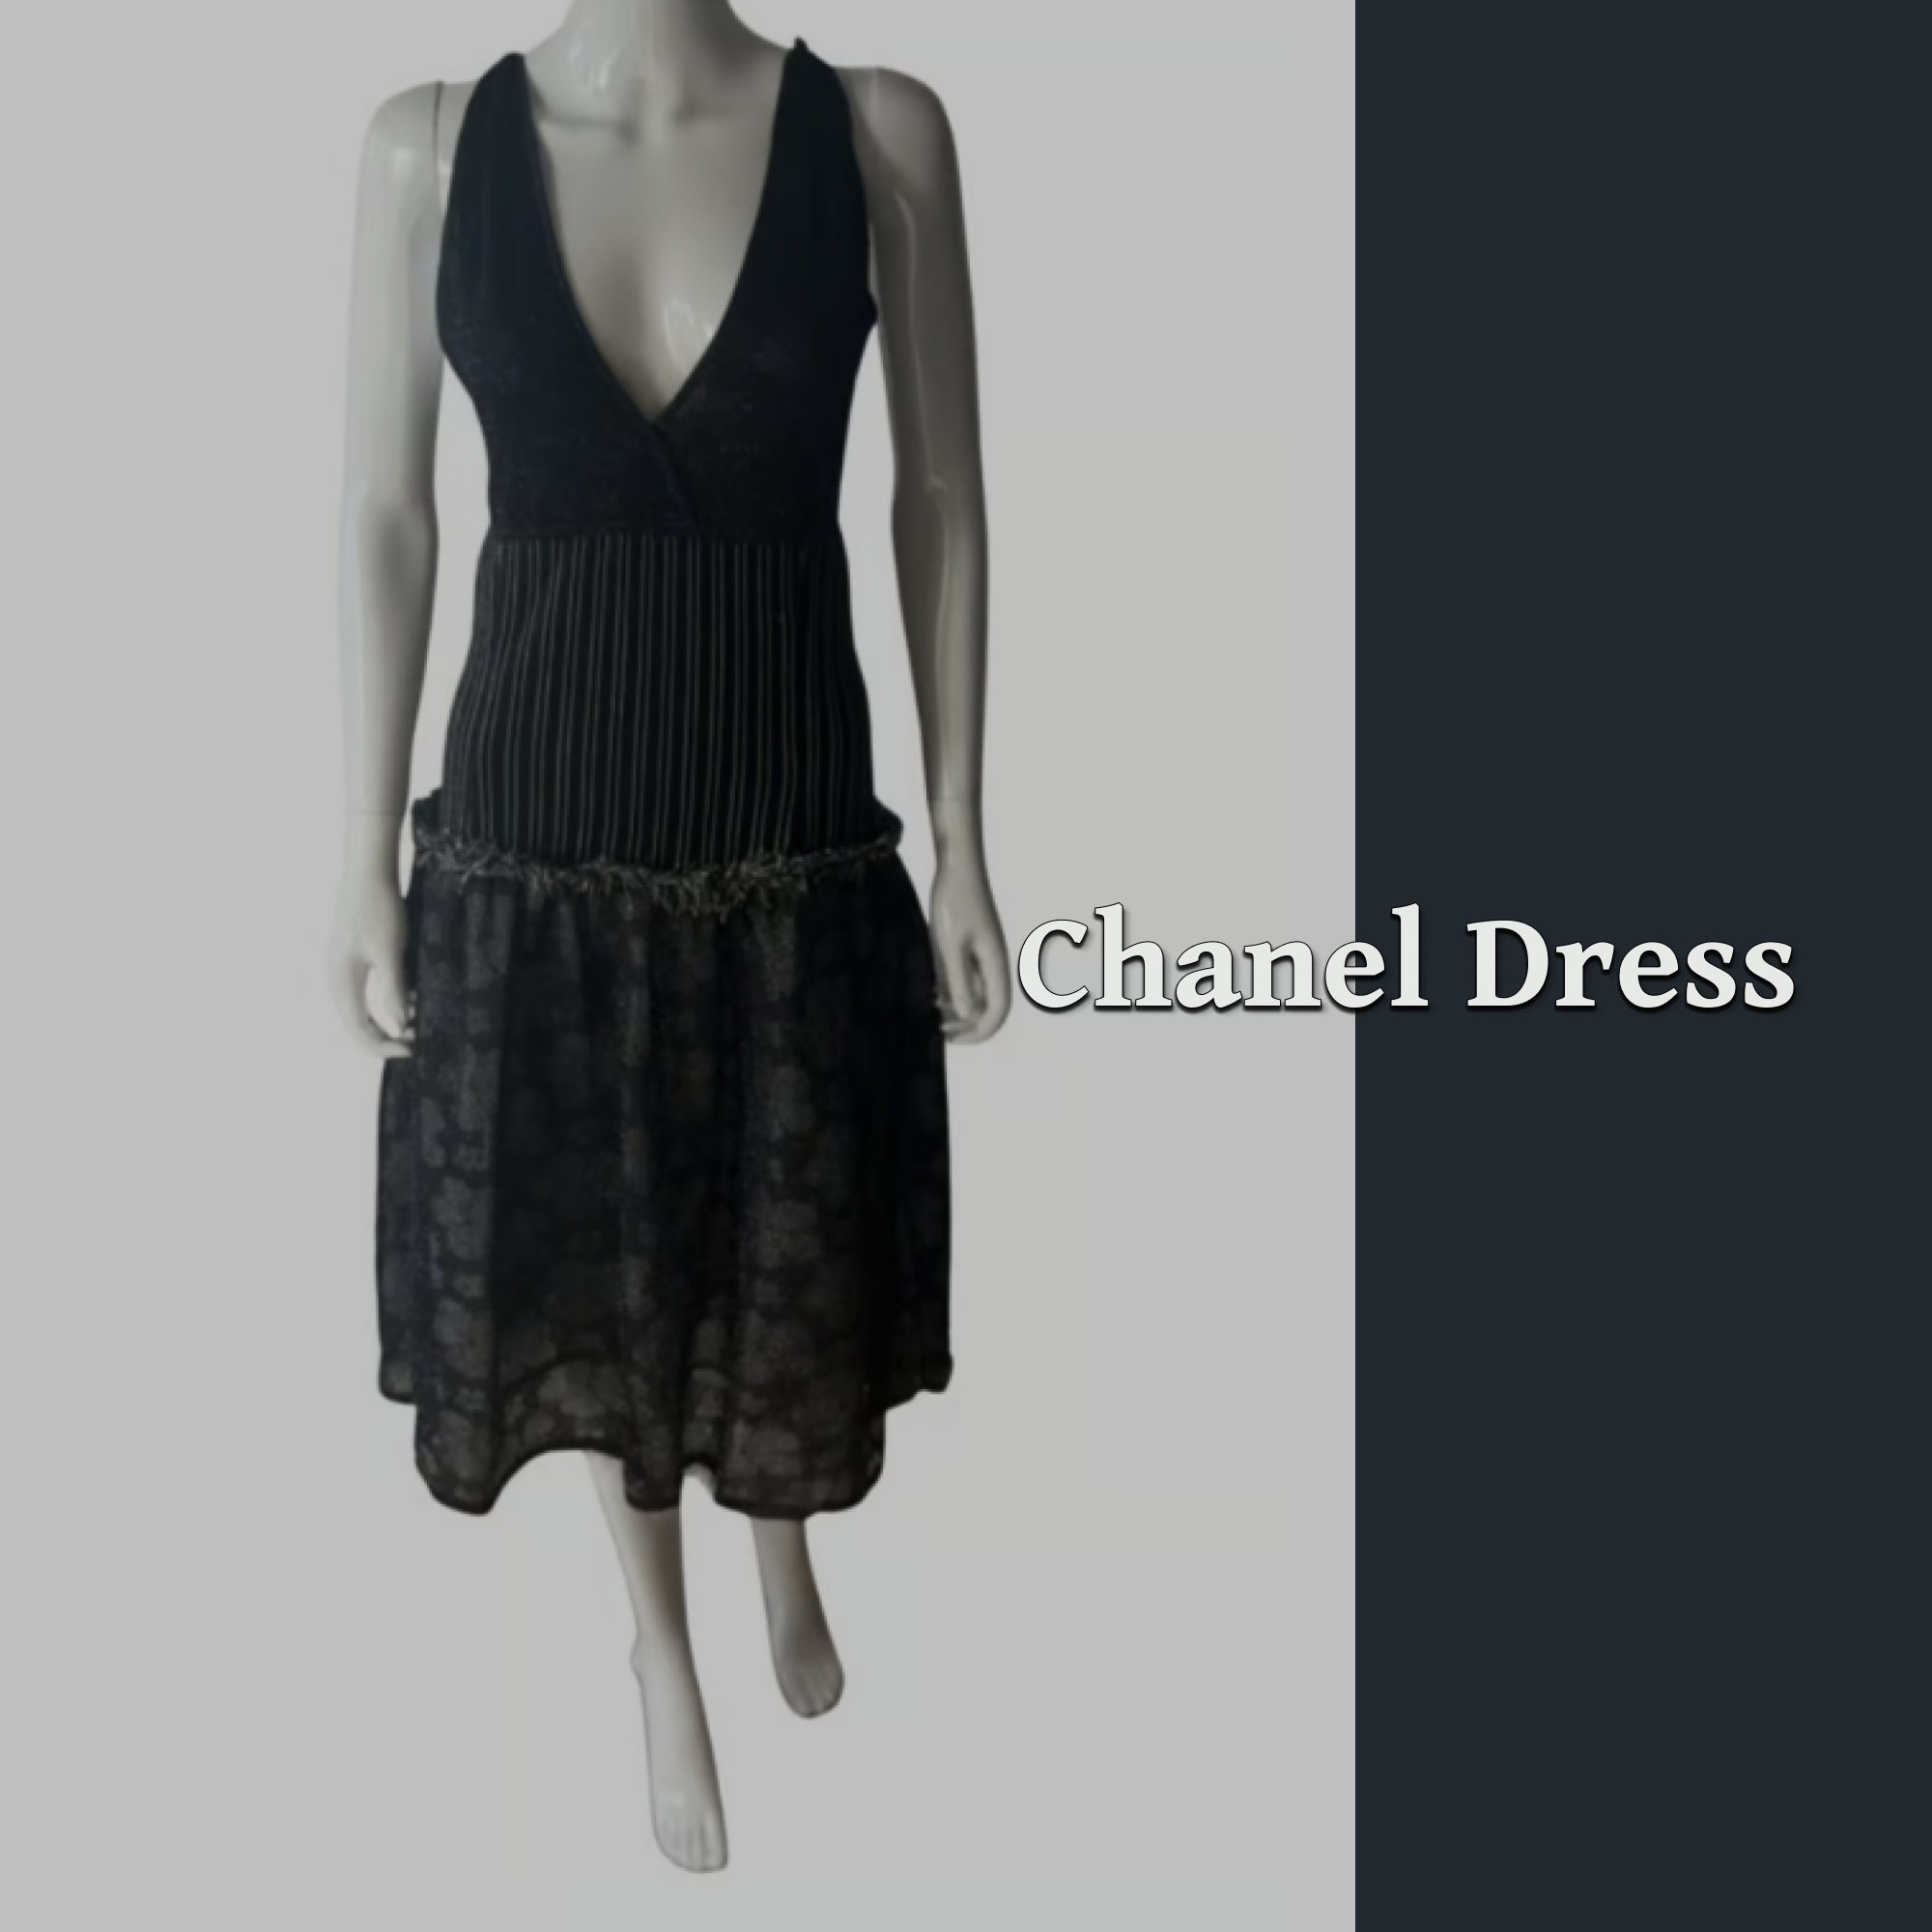 Chanel classic dress - Gem